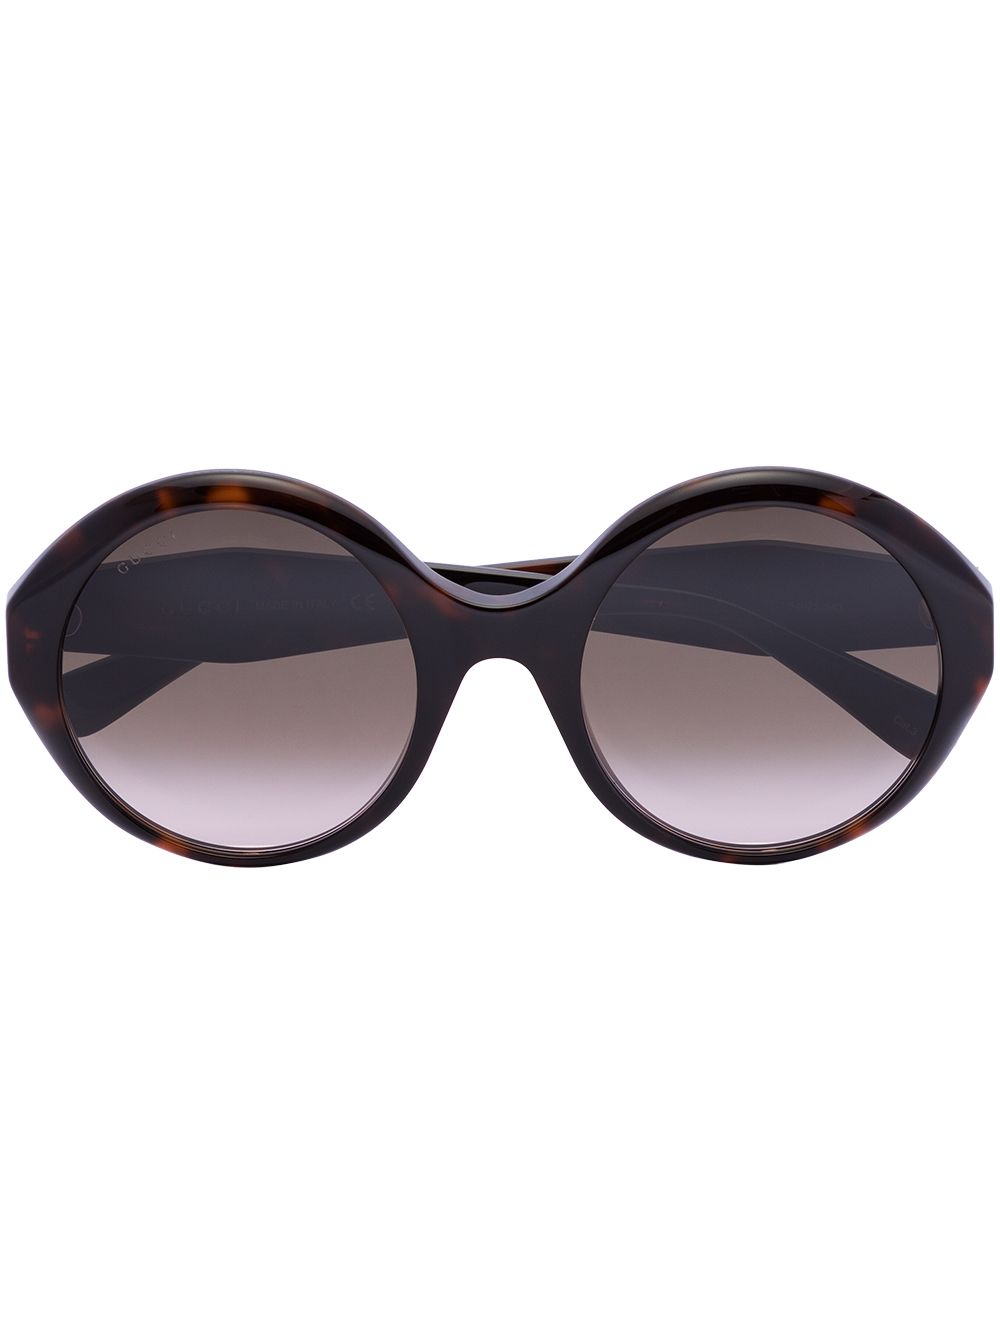 Image 1 of Gucci Eyewear Havana tortoiseshell round-frame sunglasses